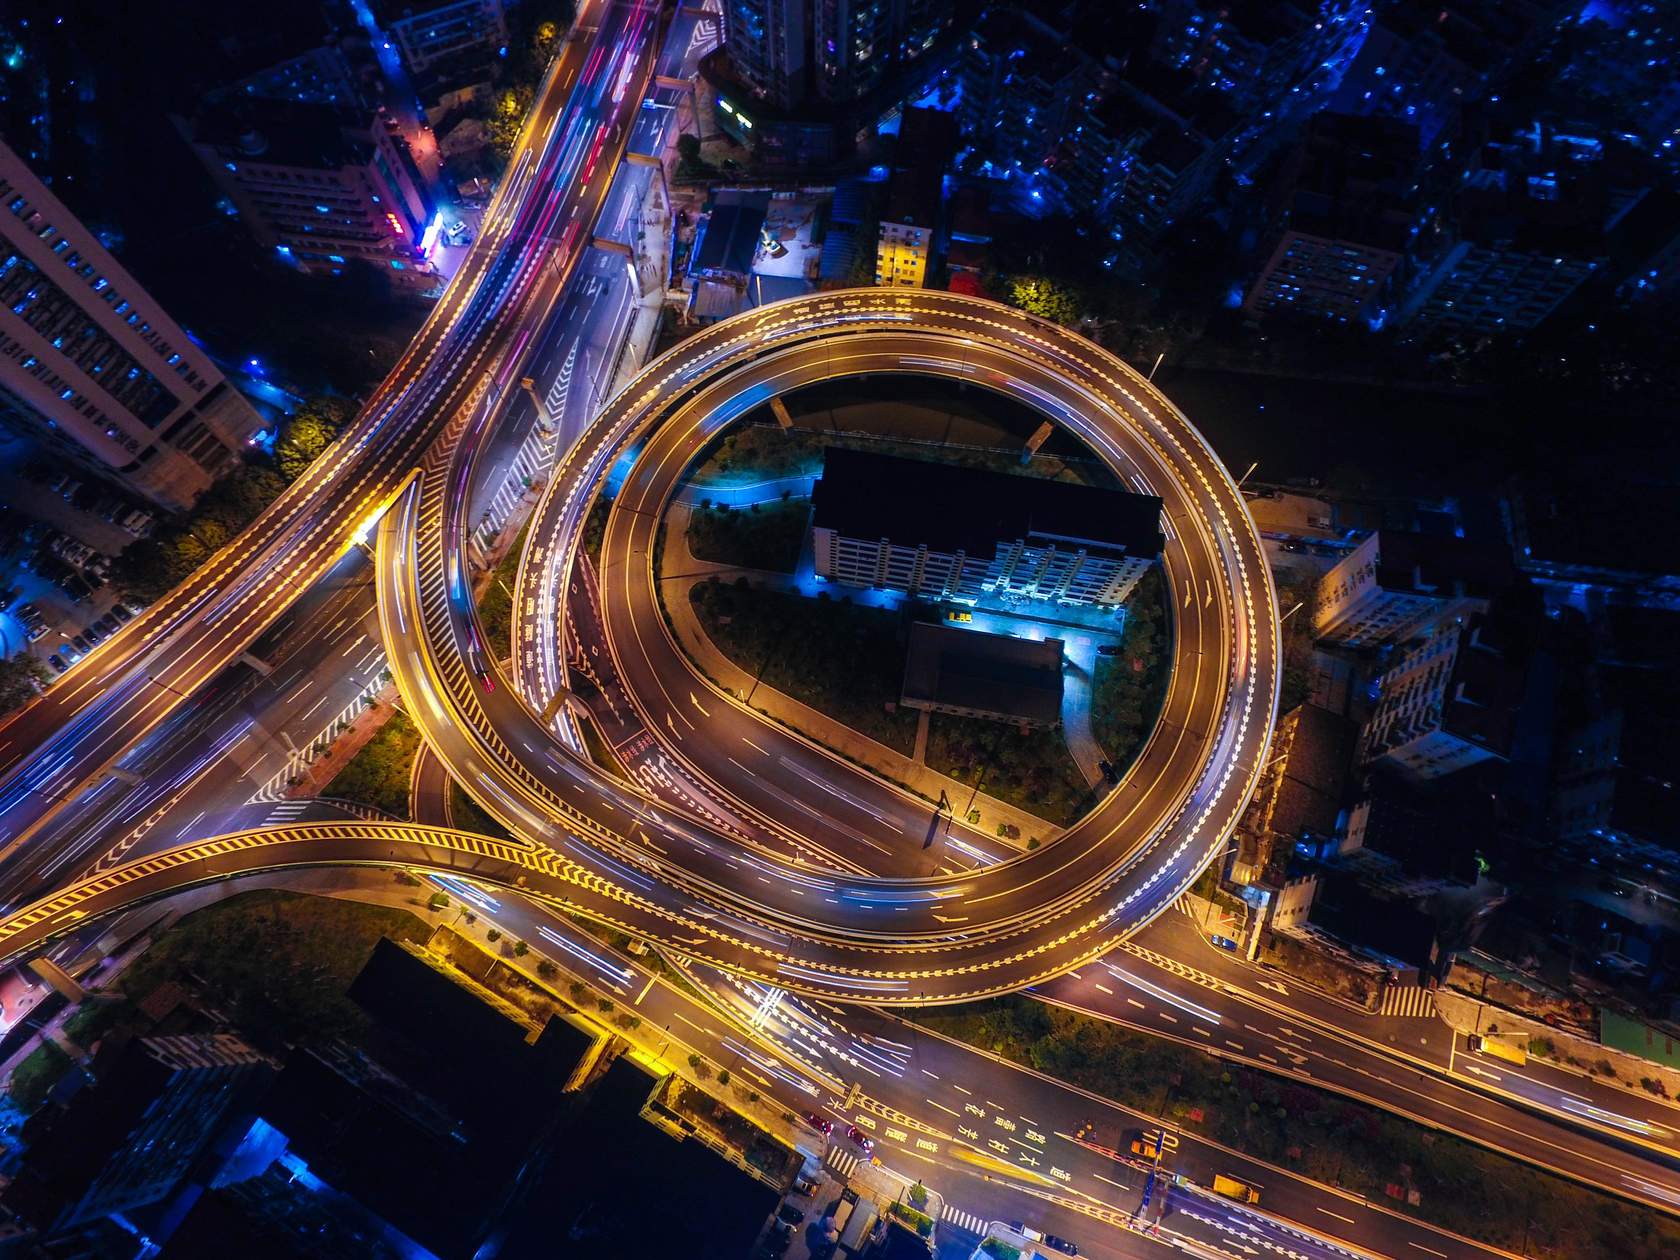 Highway interchange at night - overhead view